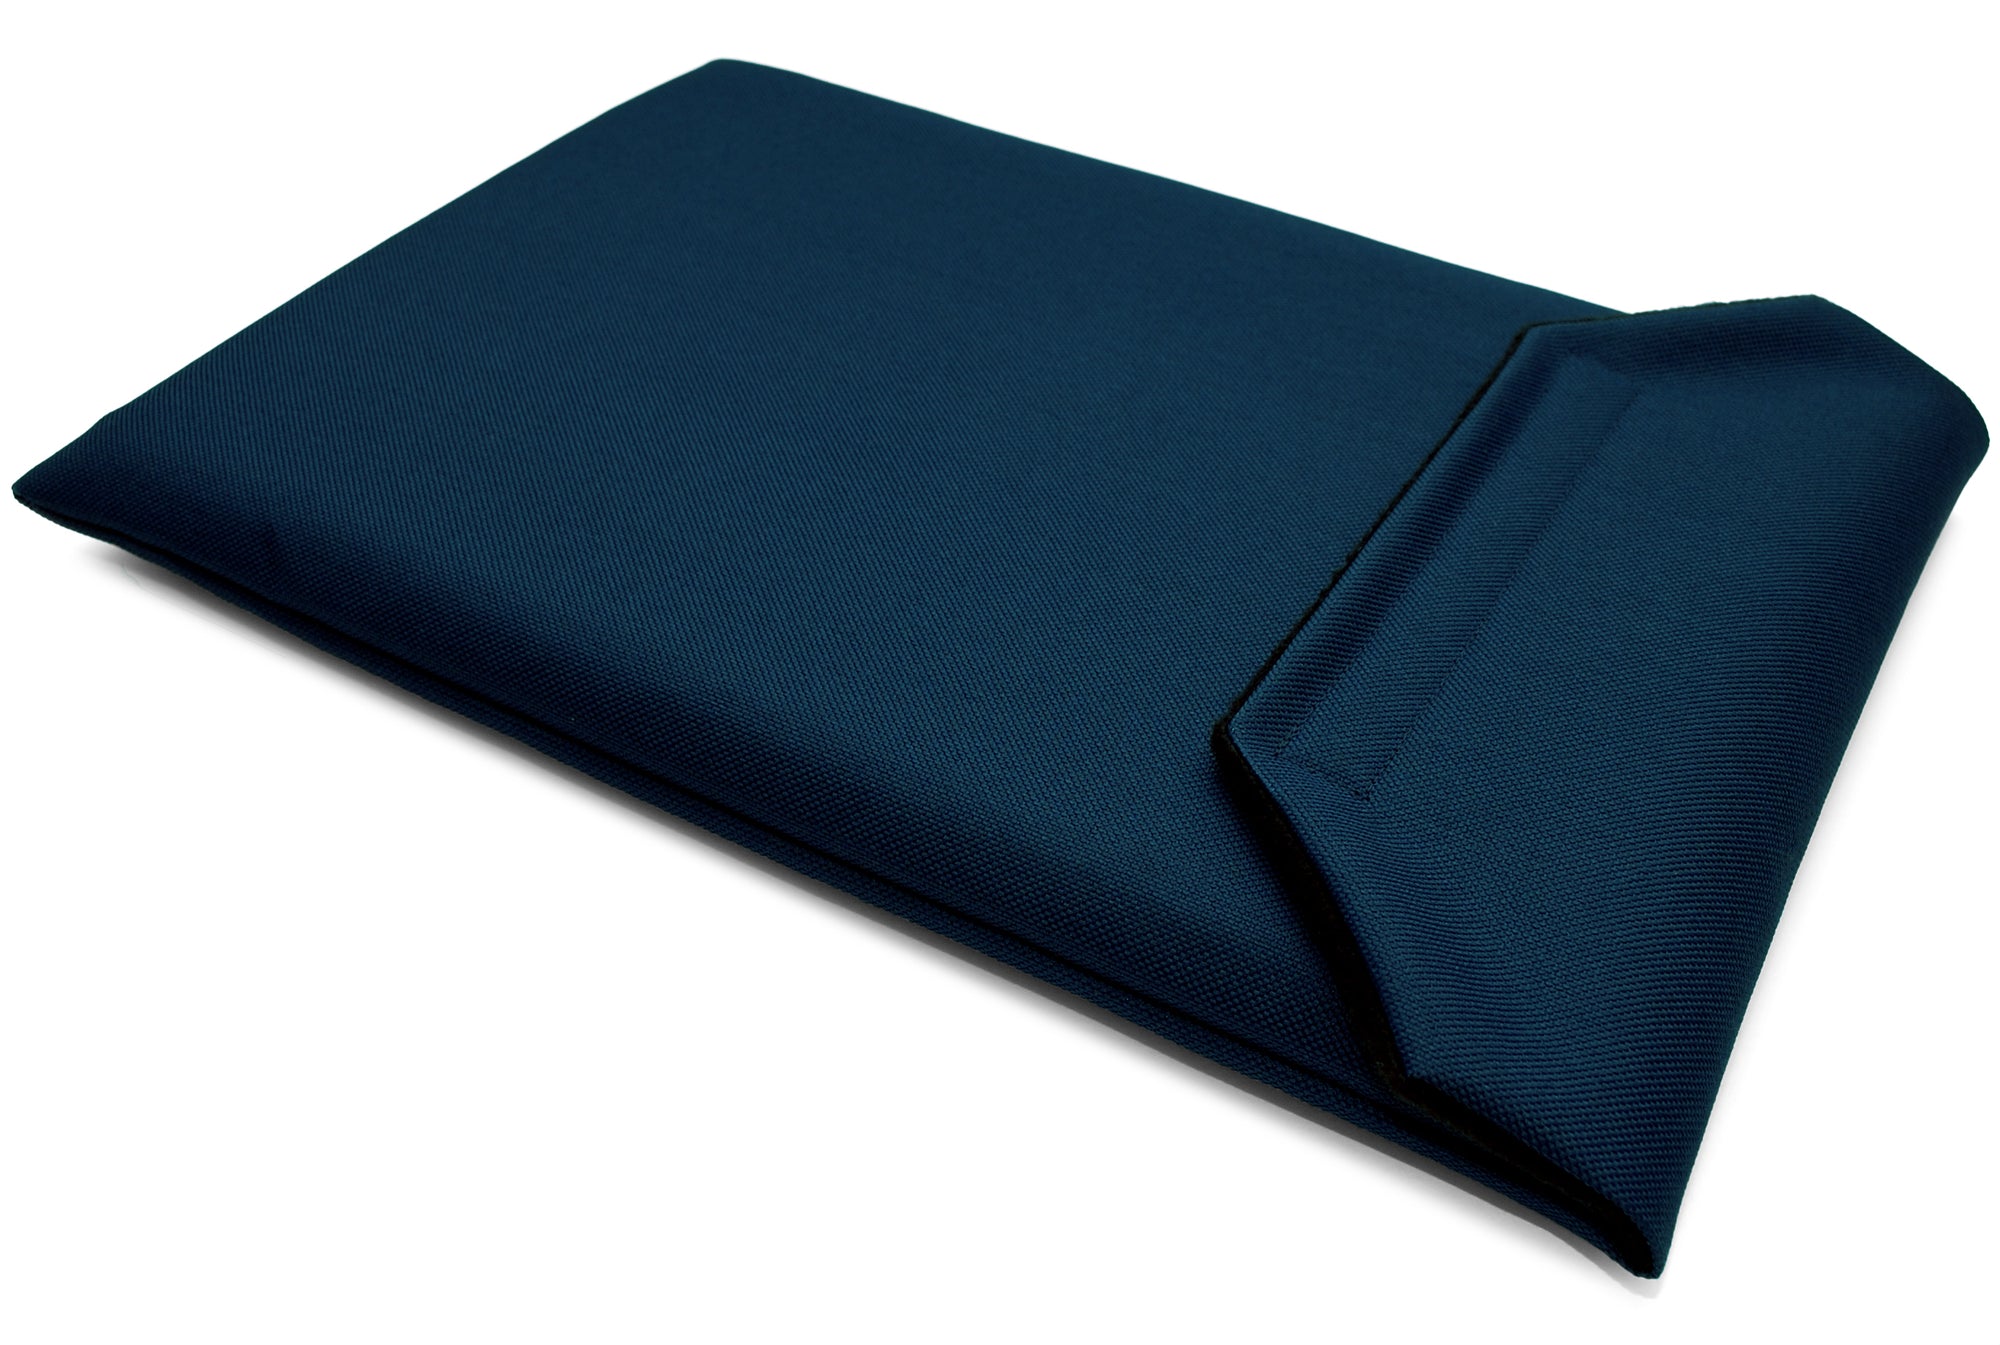 Dell Inspiron 15 7000 Sleeve Case - Navy Blue